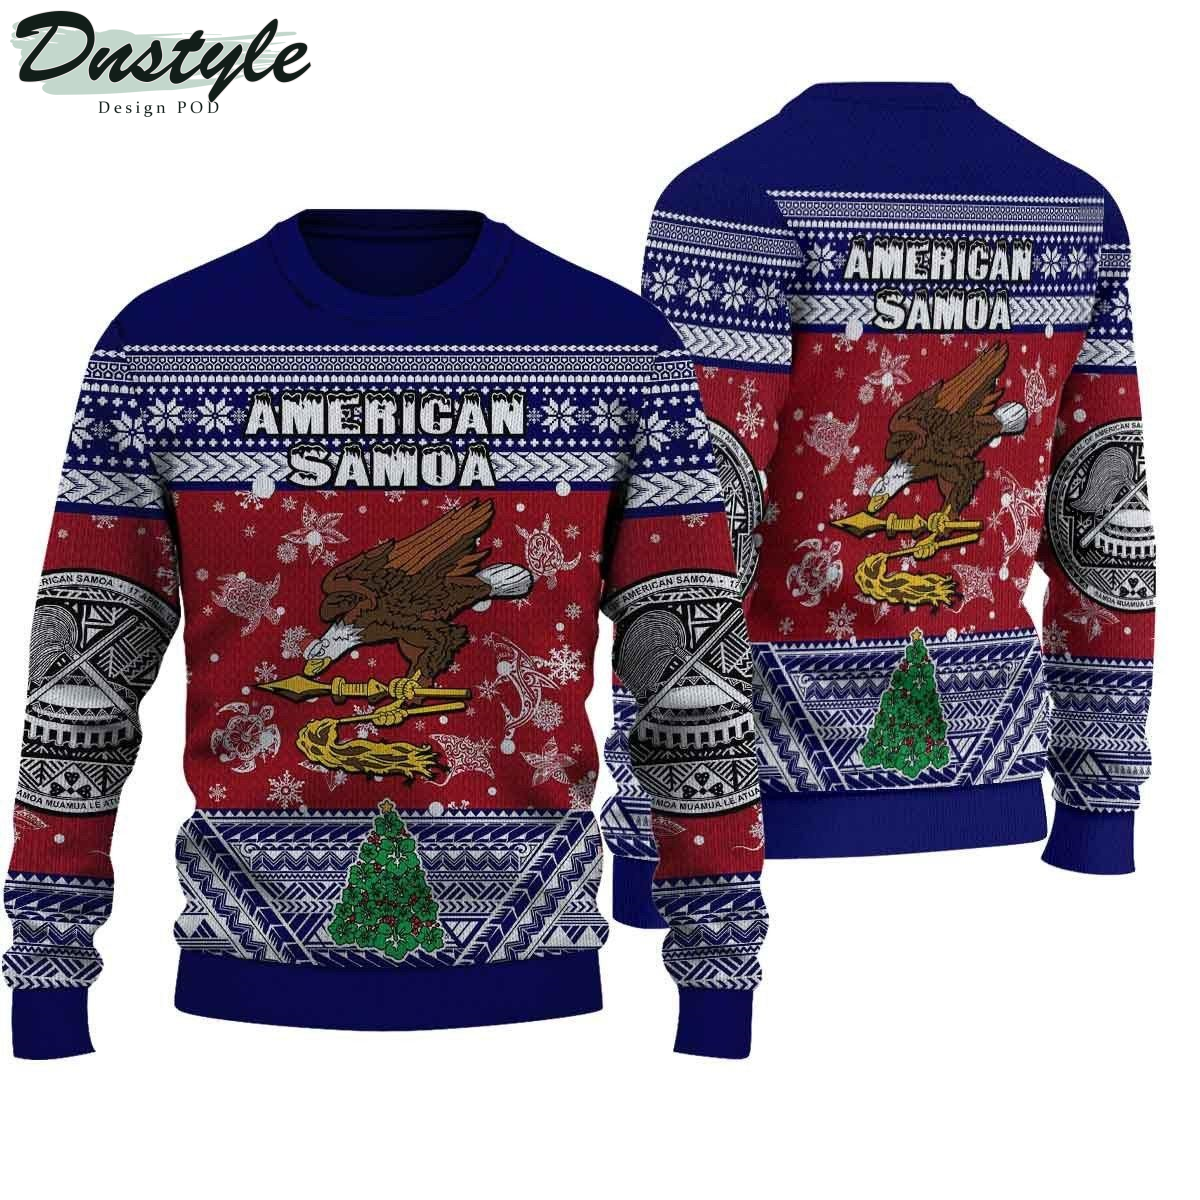 Niue ugly christmas sweater